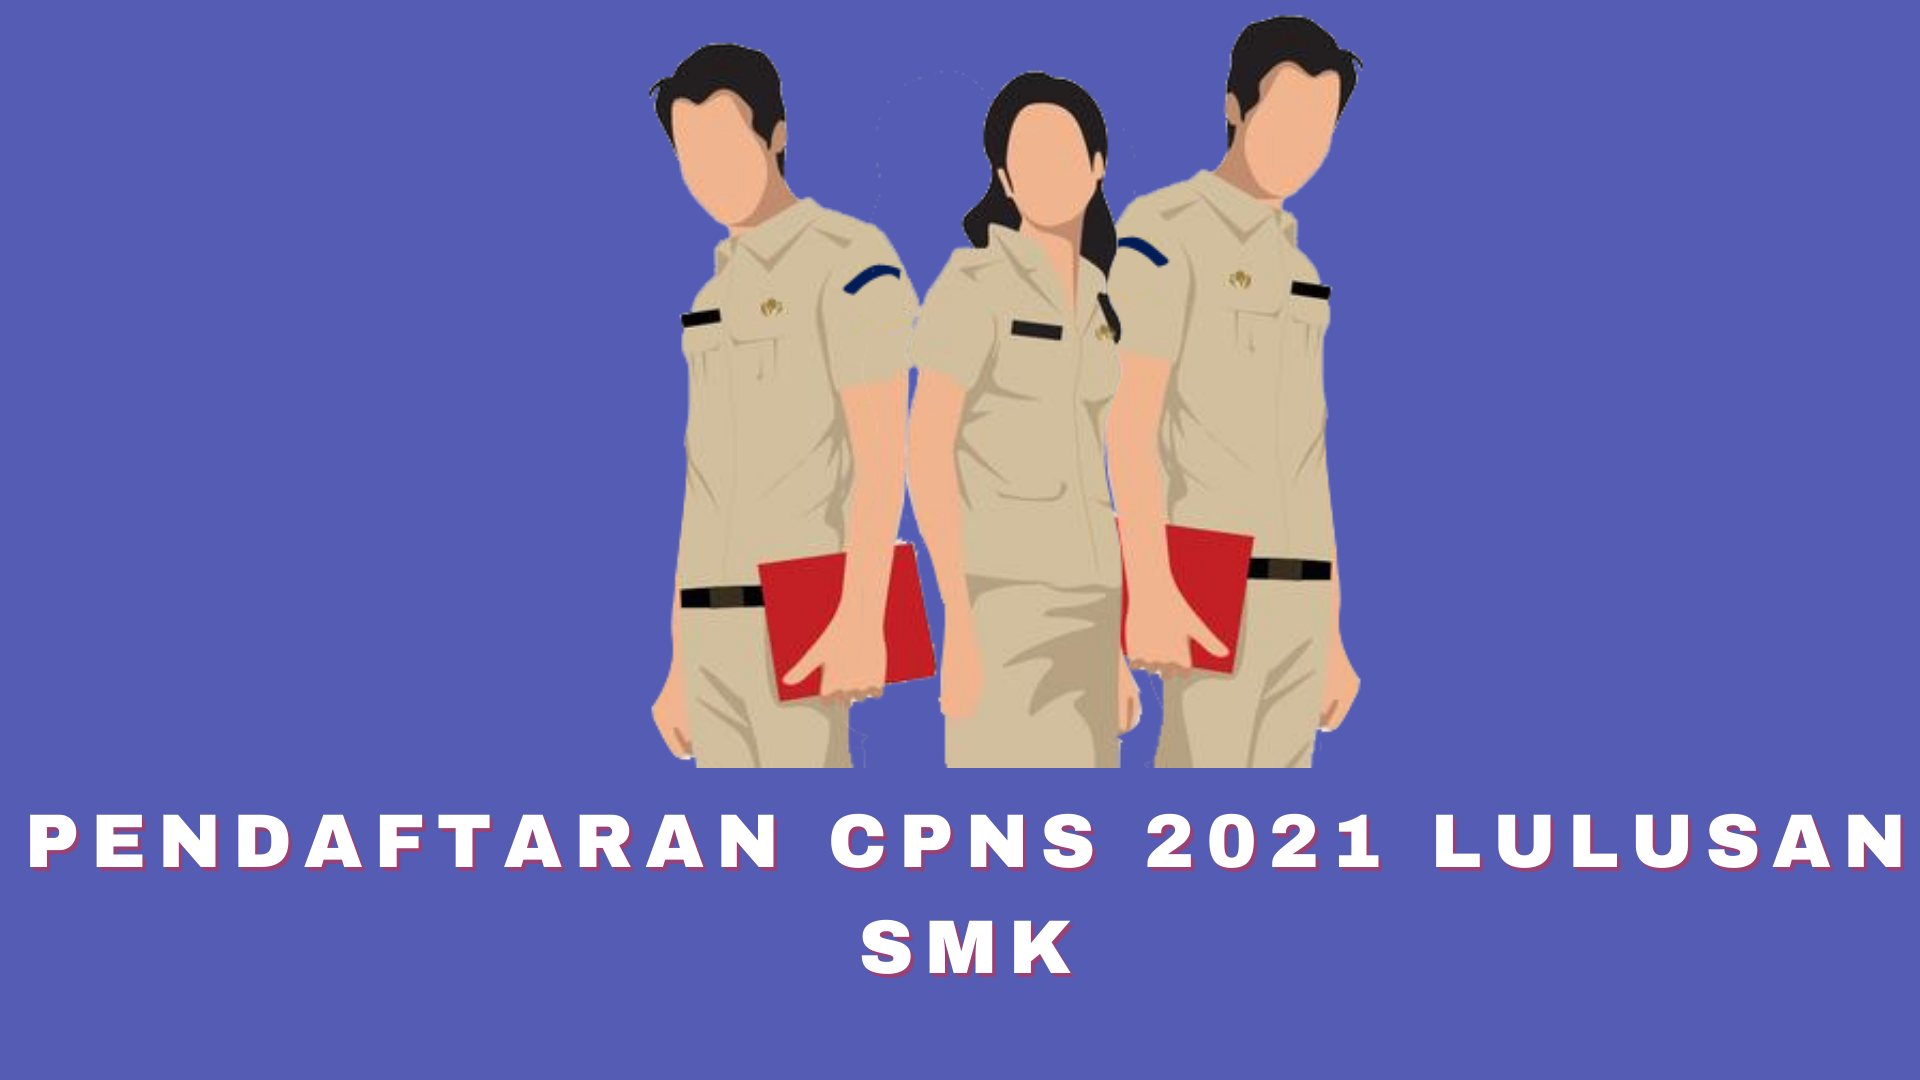 Pendaftaran CPNS 2021 Lulusan SMK - DANA MILENIAL